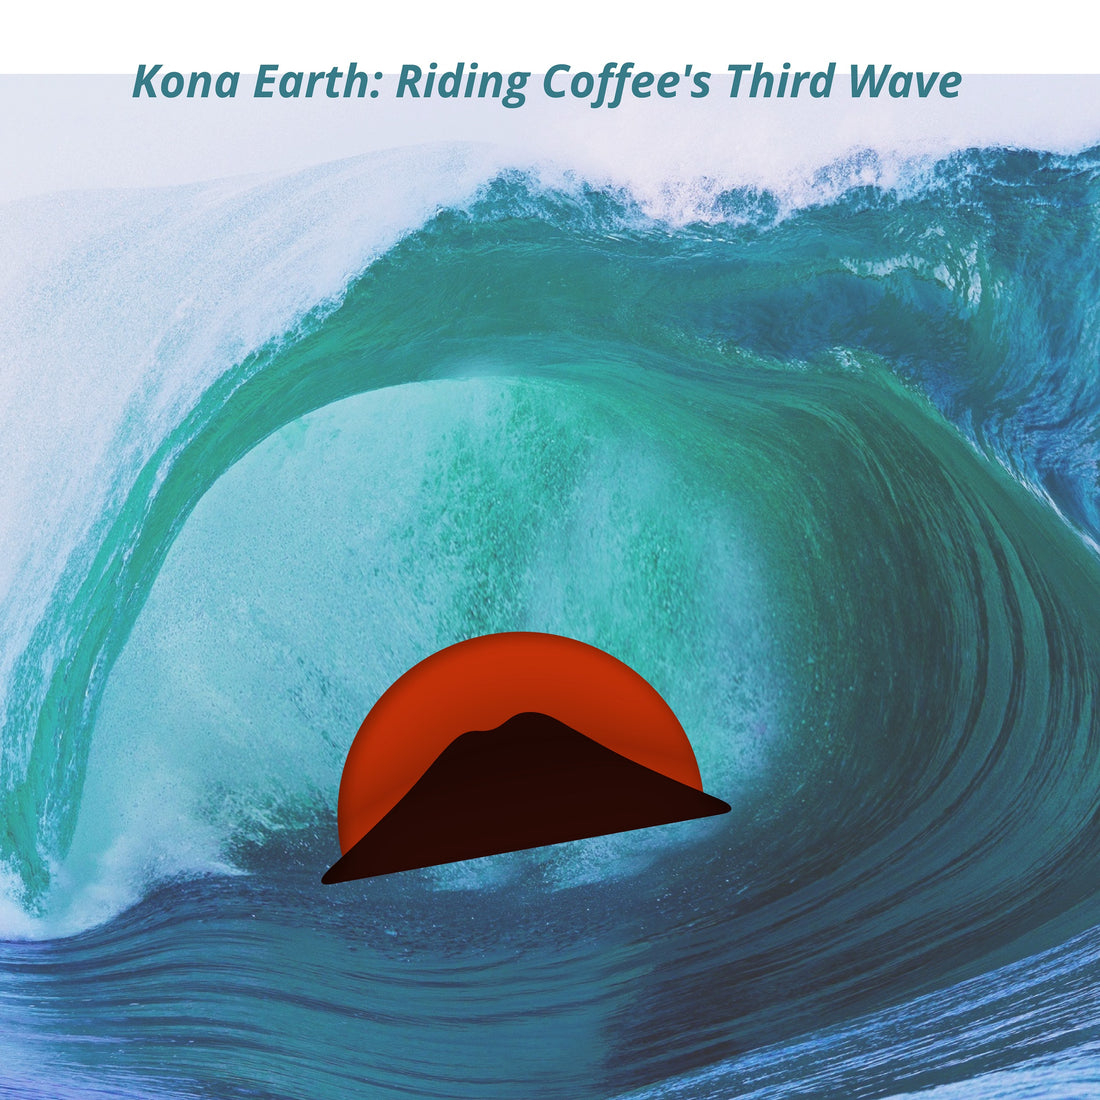 Kona Earth: Riding Coffee's Third Wave